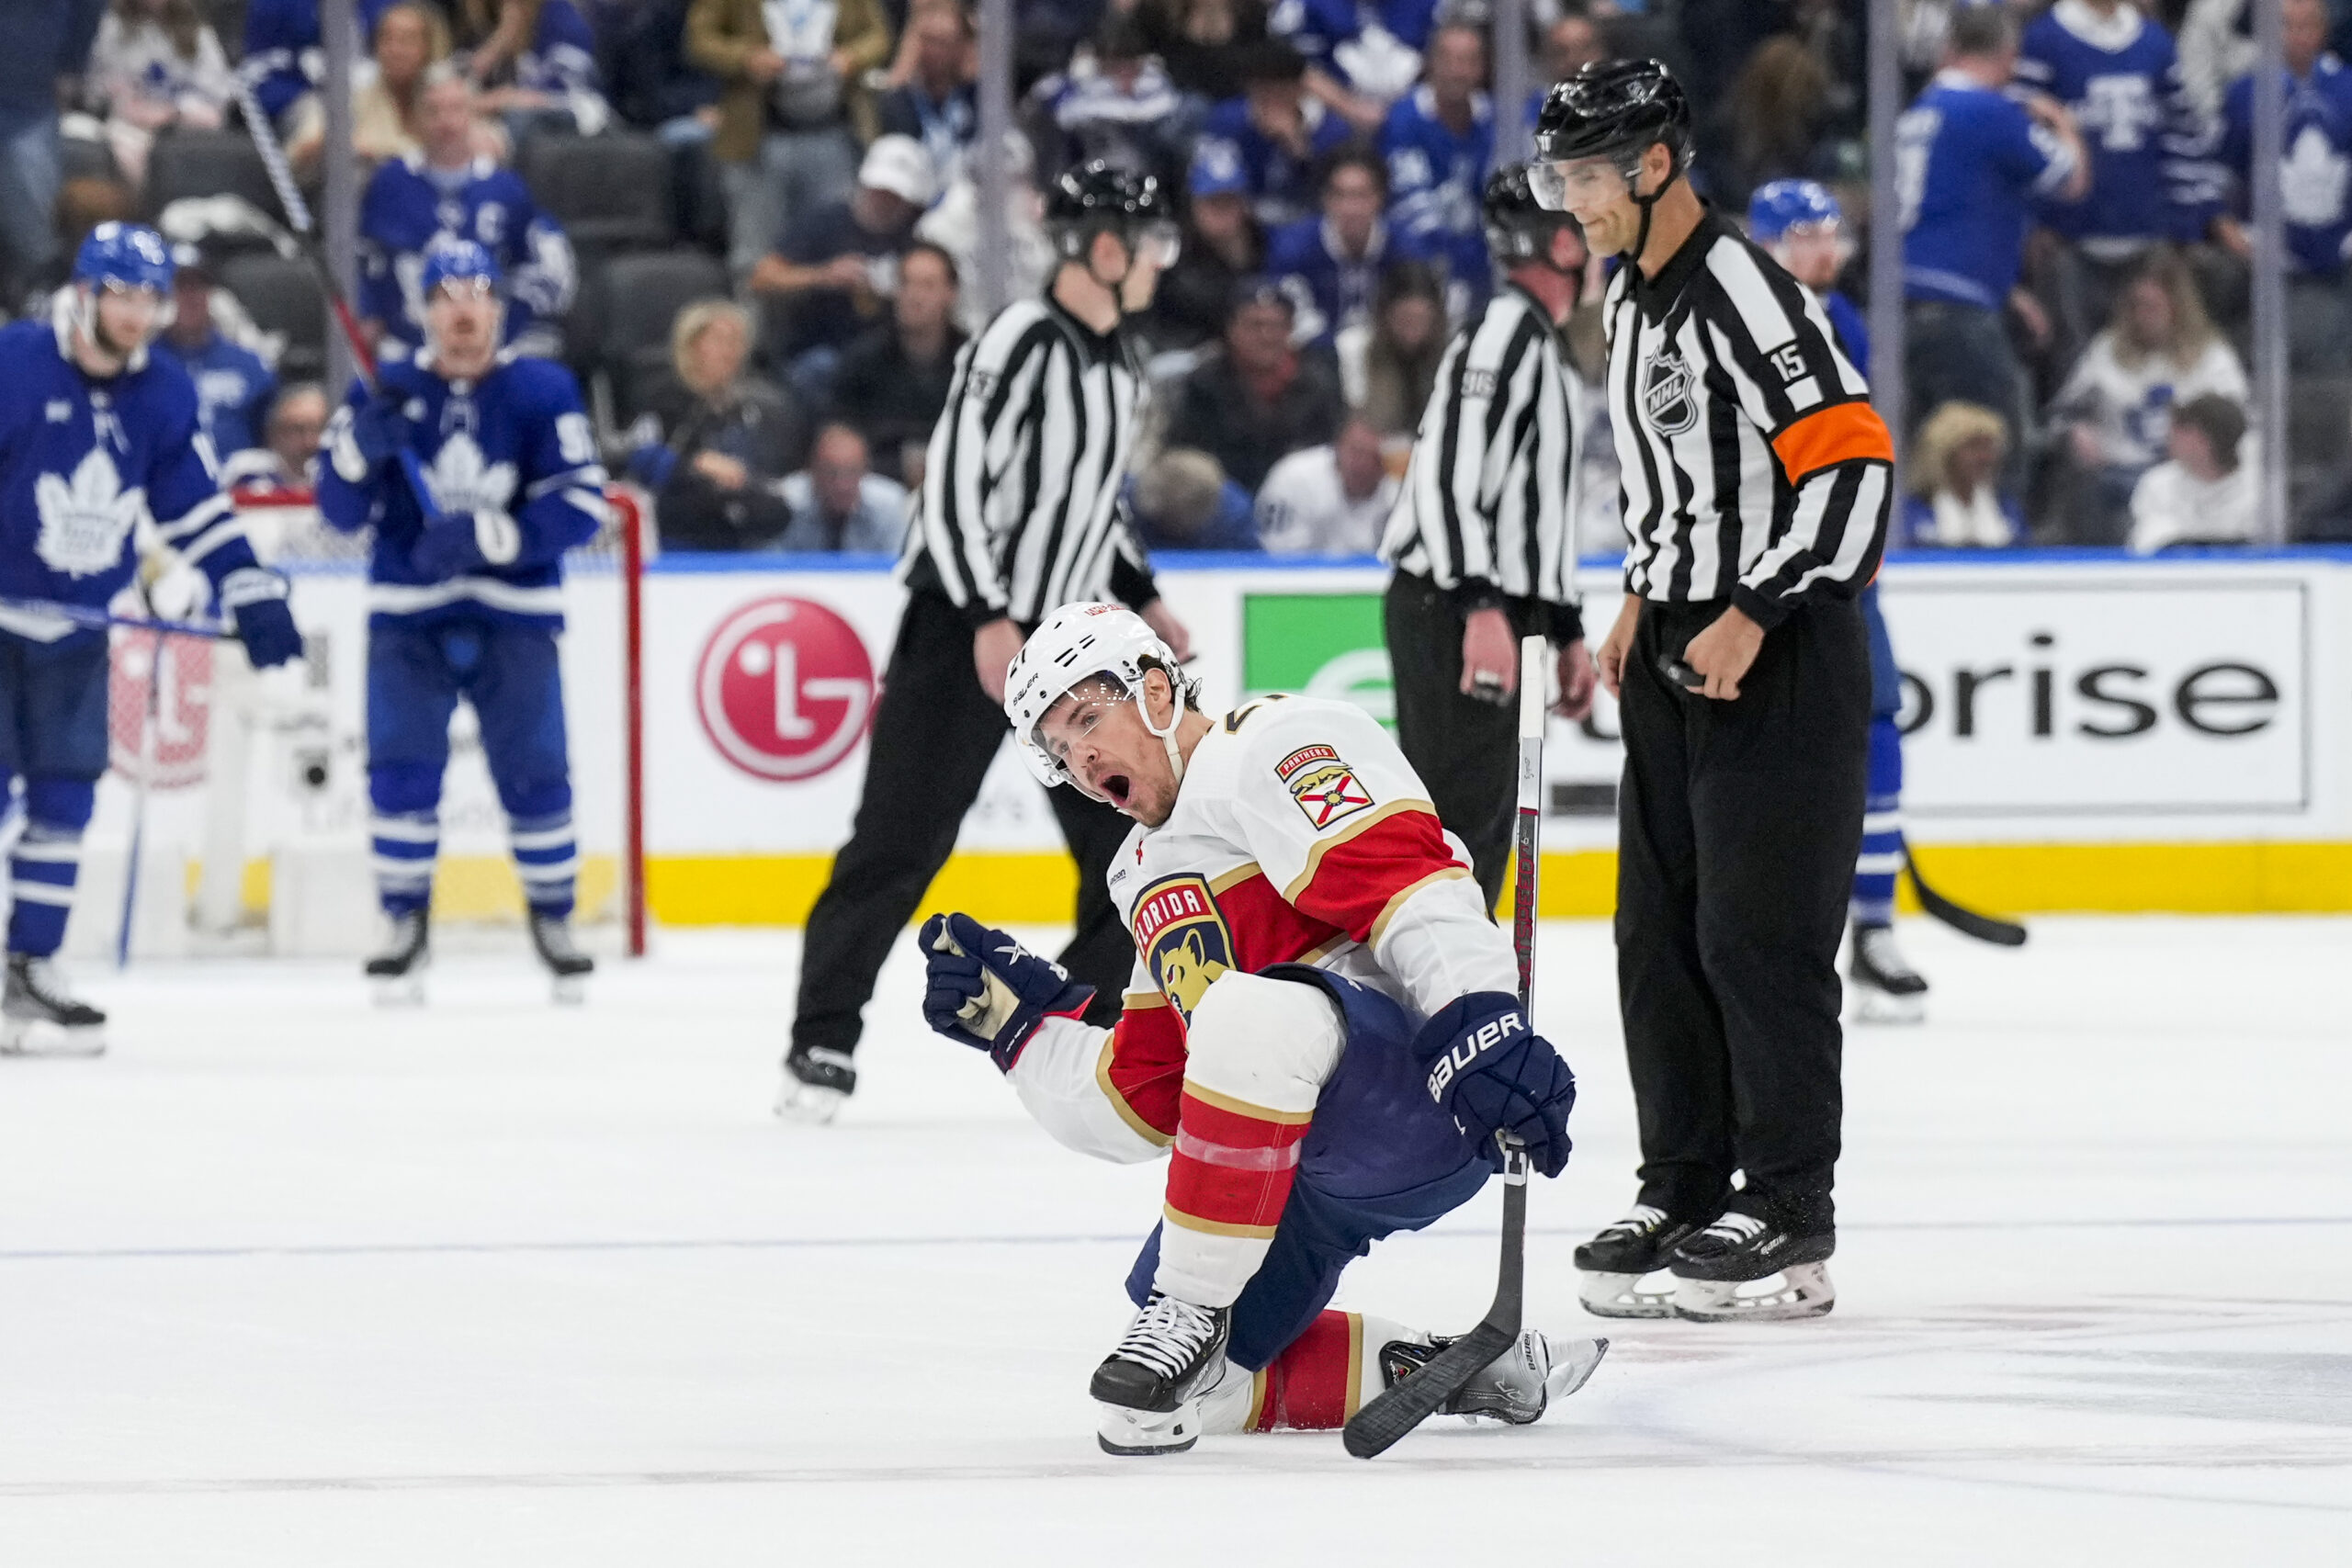 Maple Leafs This Week: Two Weak Foes Before Showdown With Big Bad Bruins